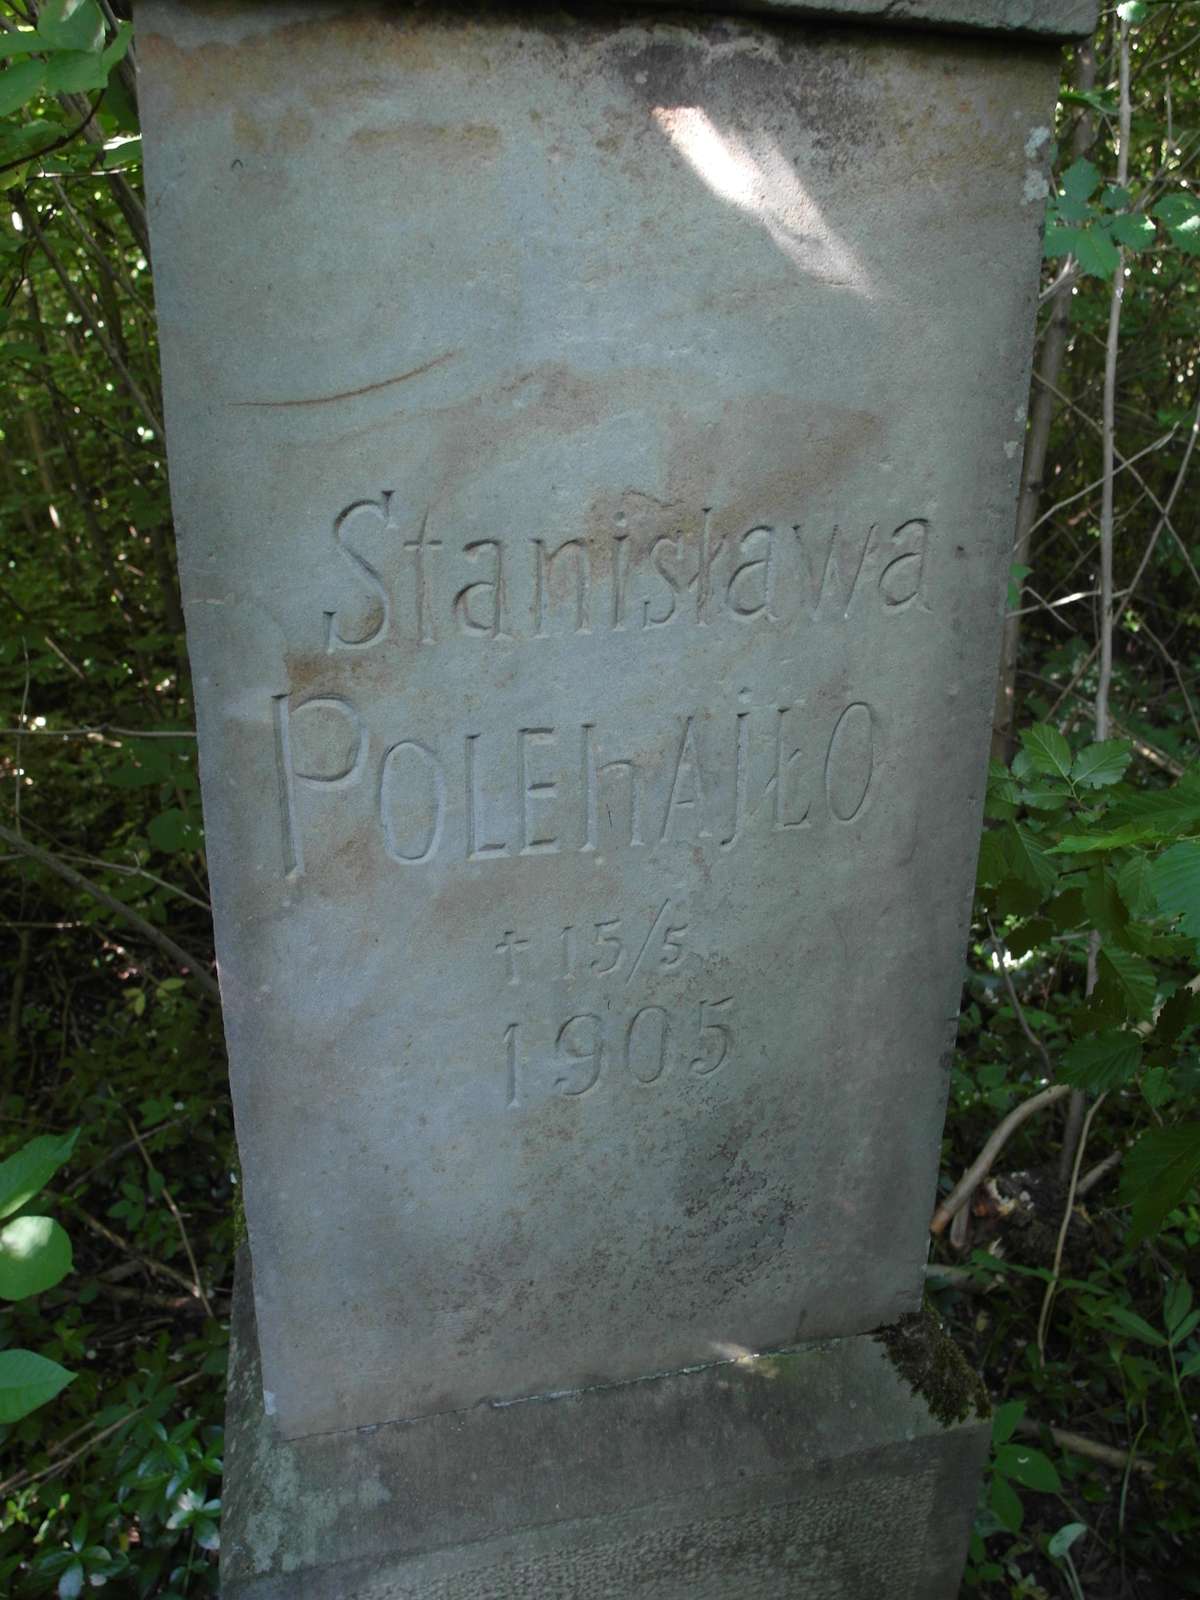 Inscription from the gravestone of Stanislava Polehajło, Bucniv cemetery